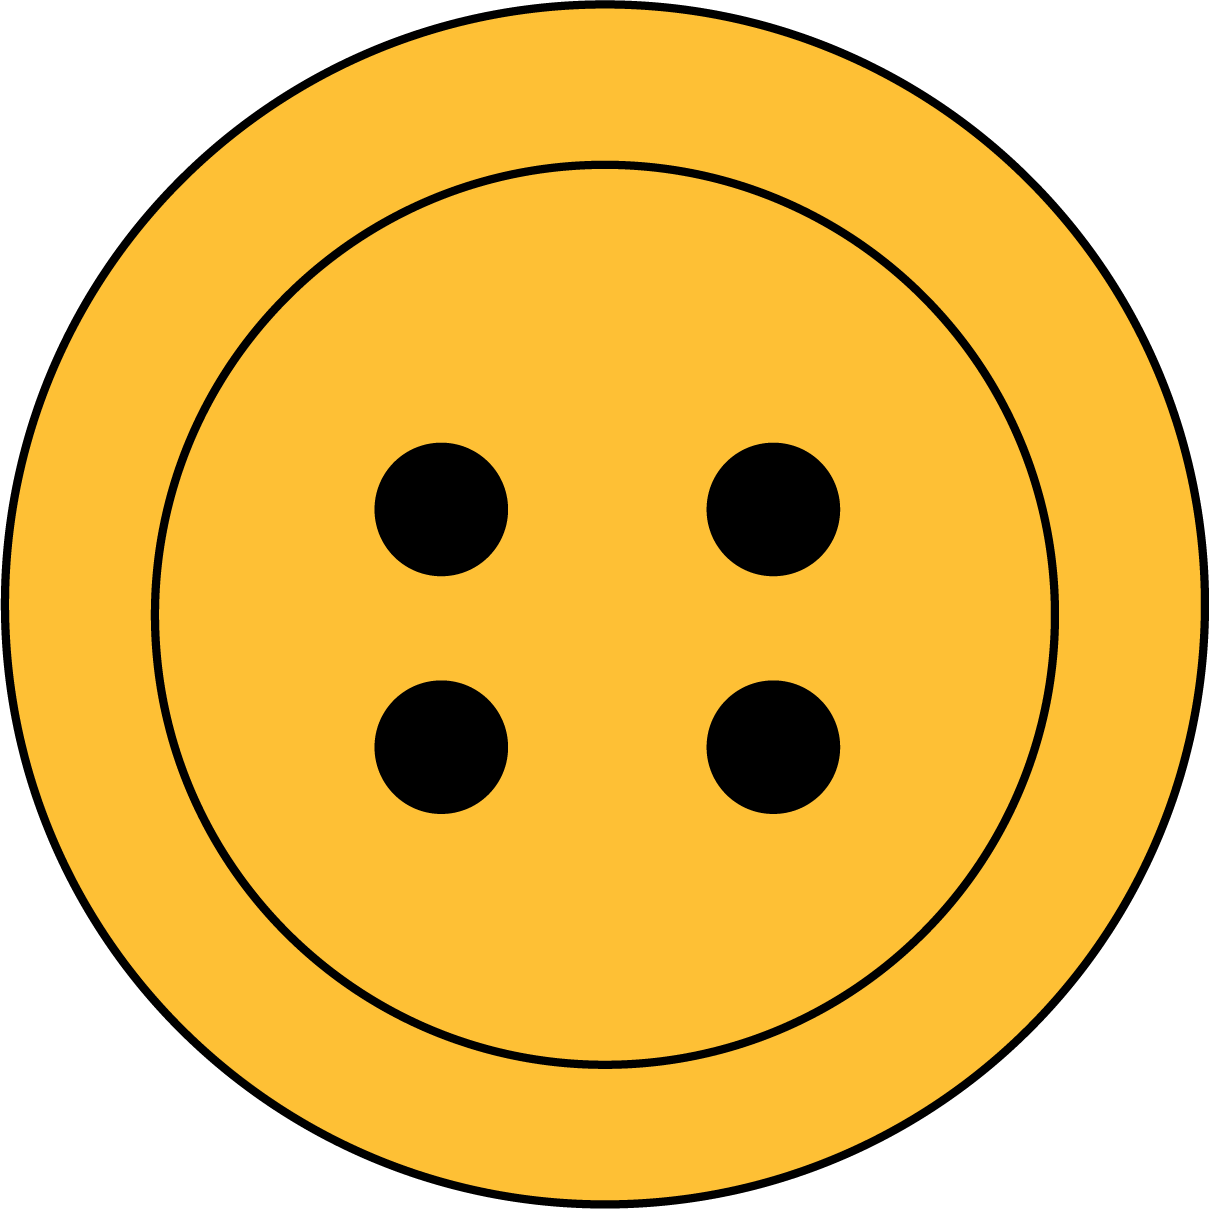 Round yellow button, 4 holes.